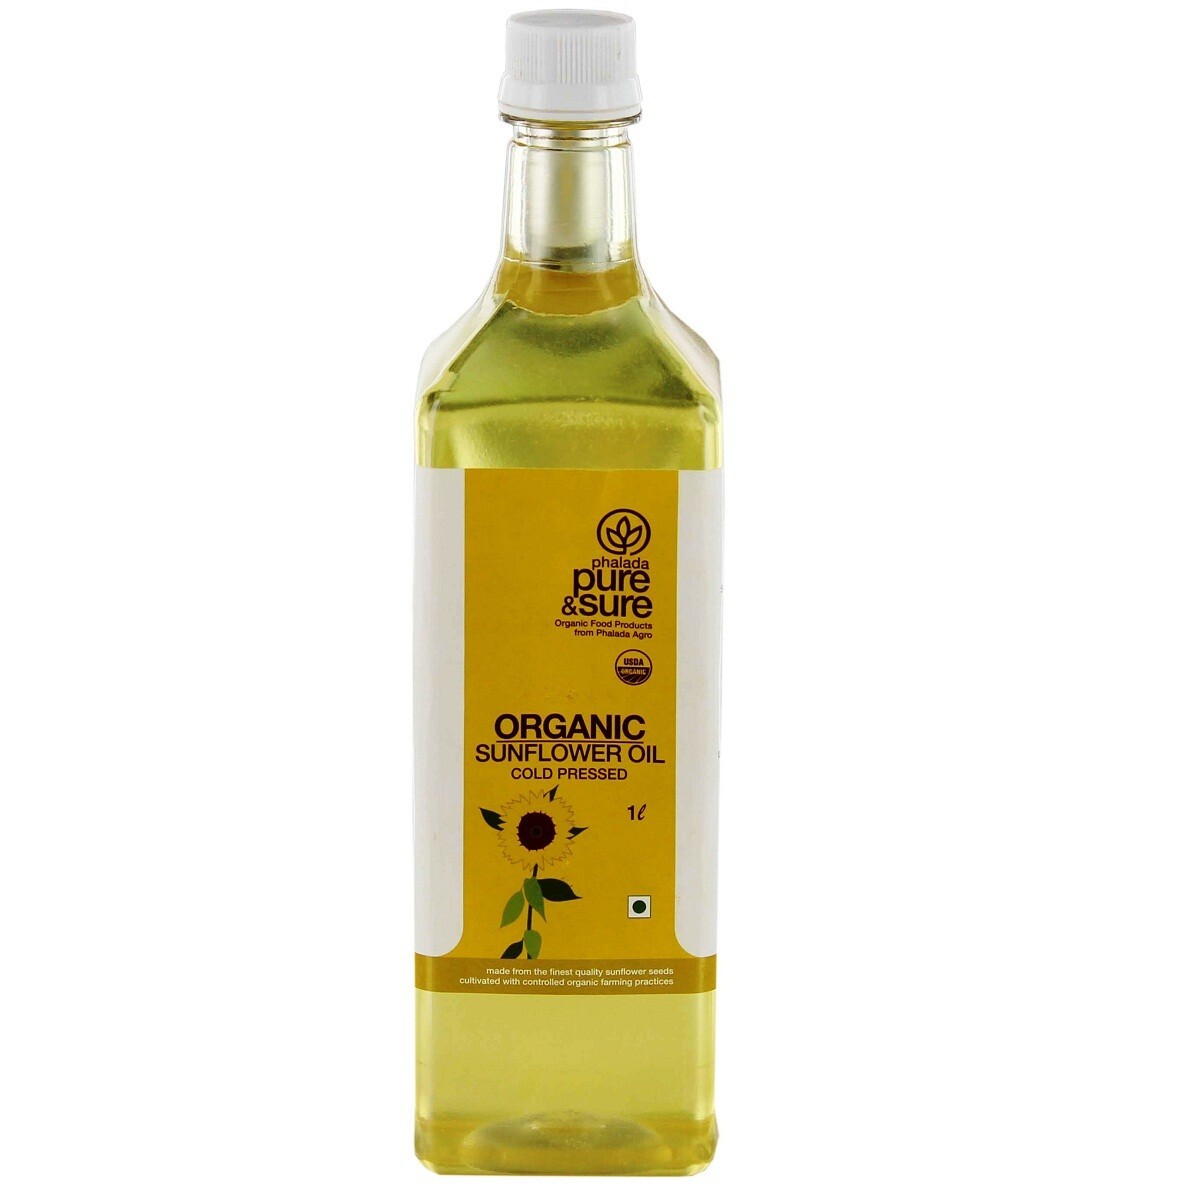 Pure & Sure Organic Sun Flower Oil 1 Liter